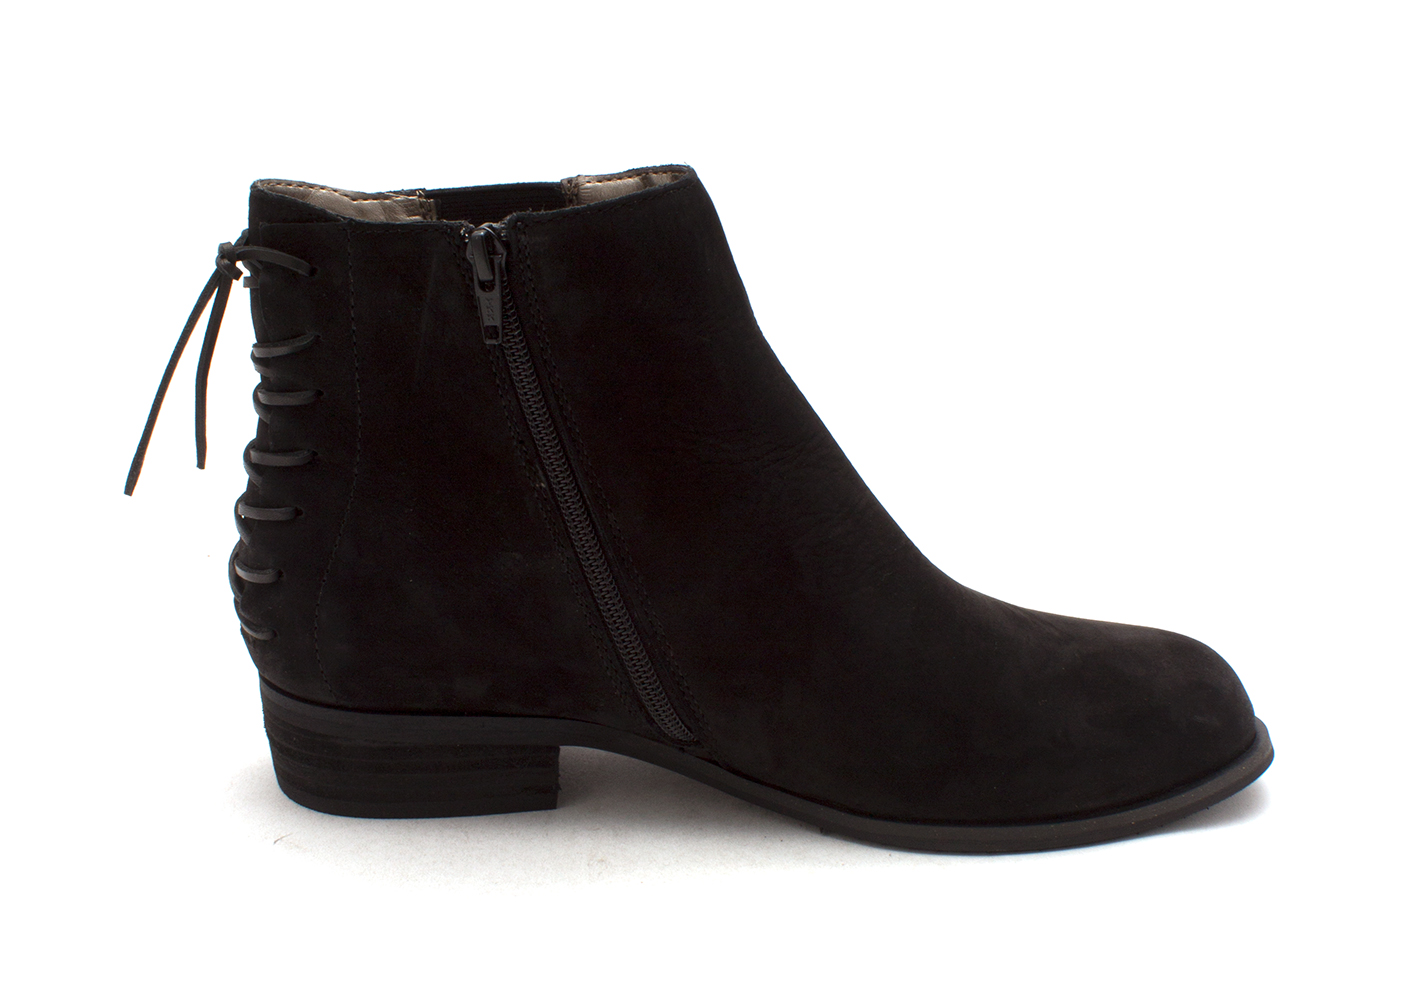 ARRAY login Womens Boots Black leather 10 US / 8 UK | eBay